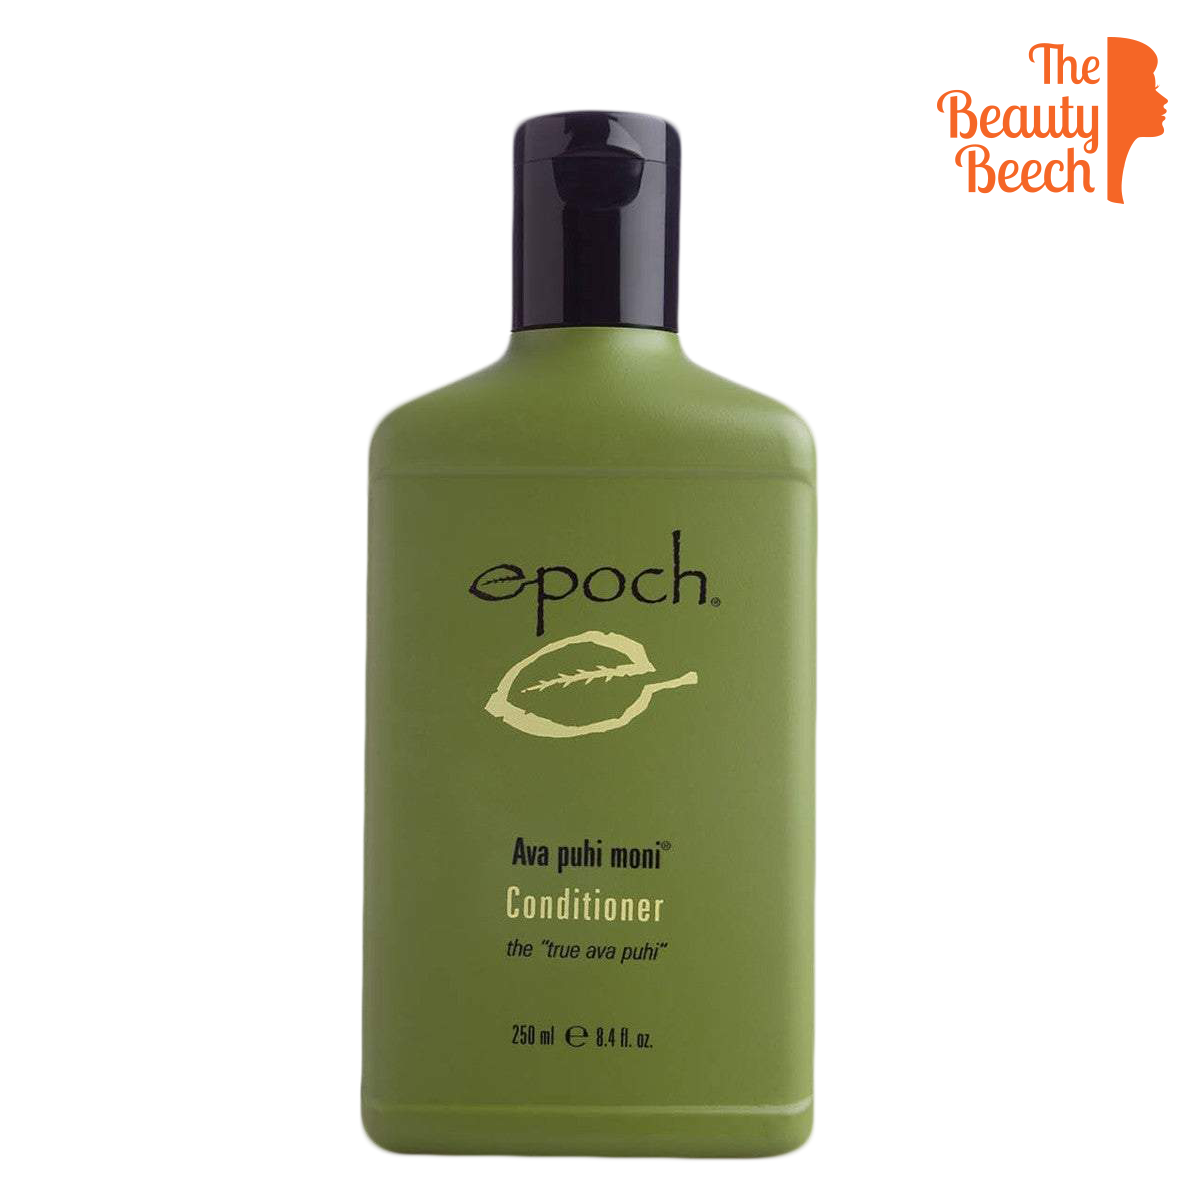 Epoch® puhi moni® Conditioner – The Beauty Beech